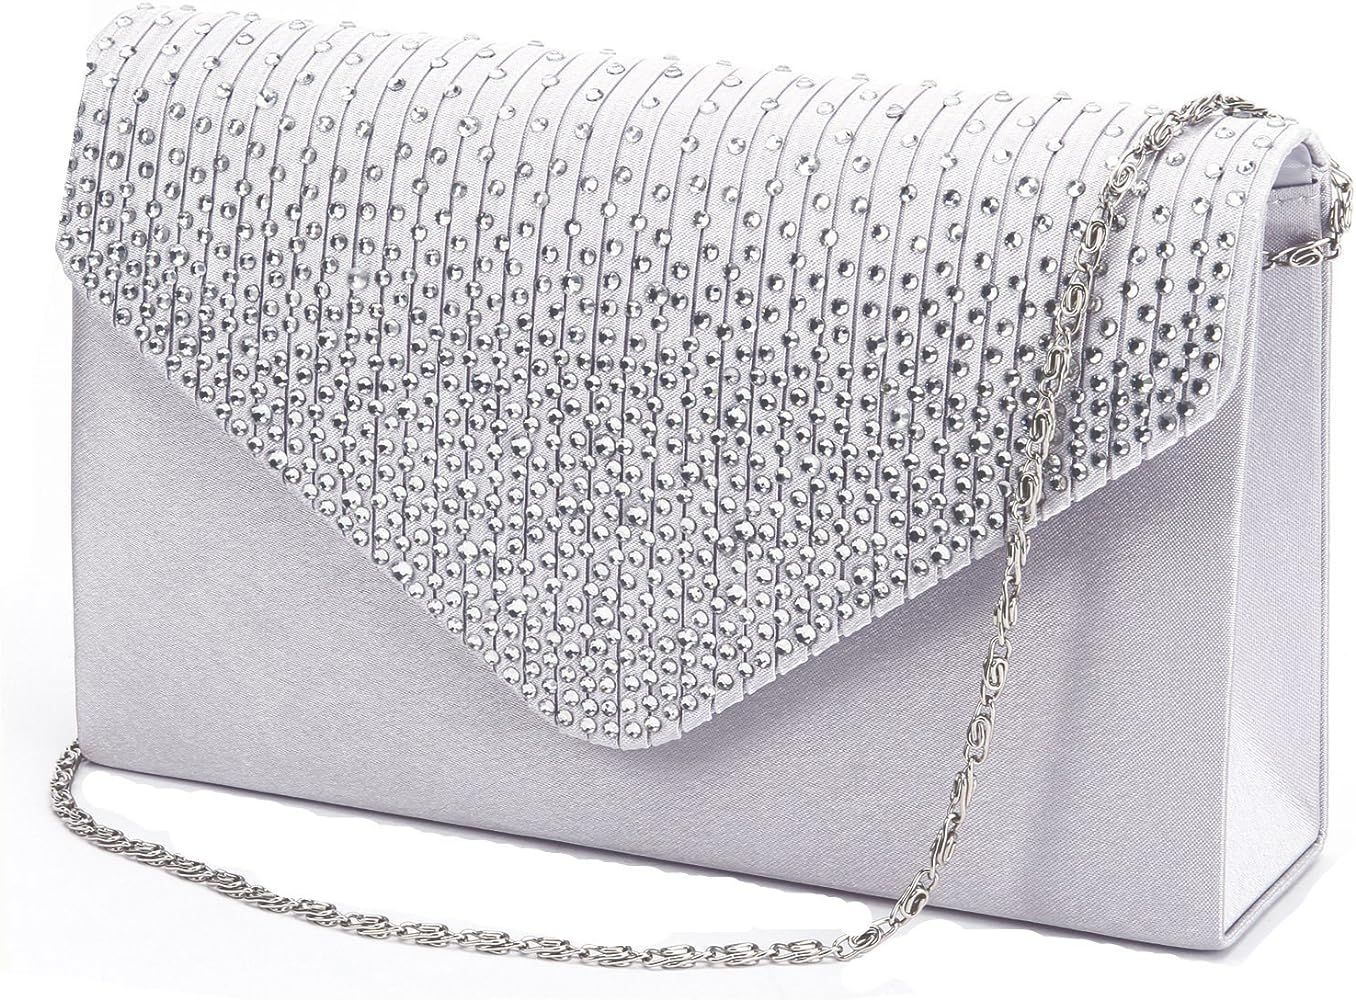 Nodykka Purses and Handbags Envelope Evening Clutch Crossbody Bags Classic Wedding Party Shoulder... | Amazon (US)